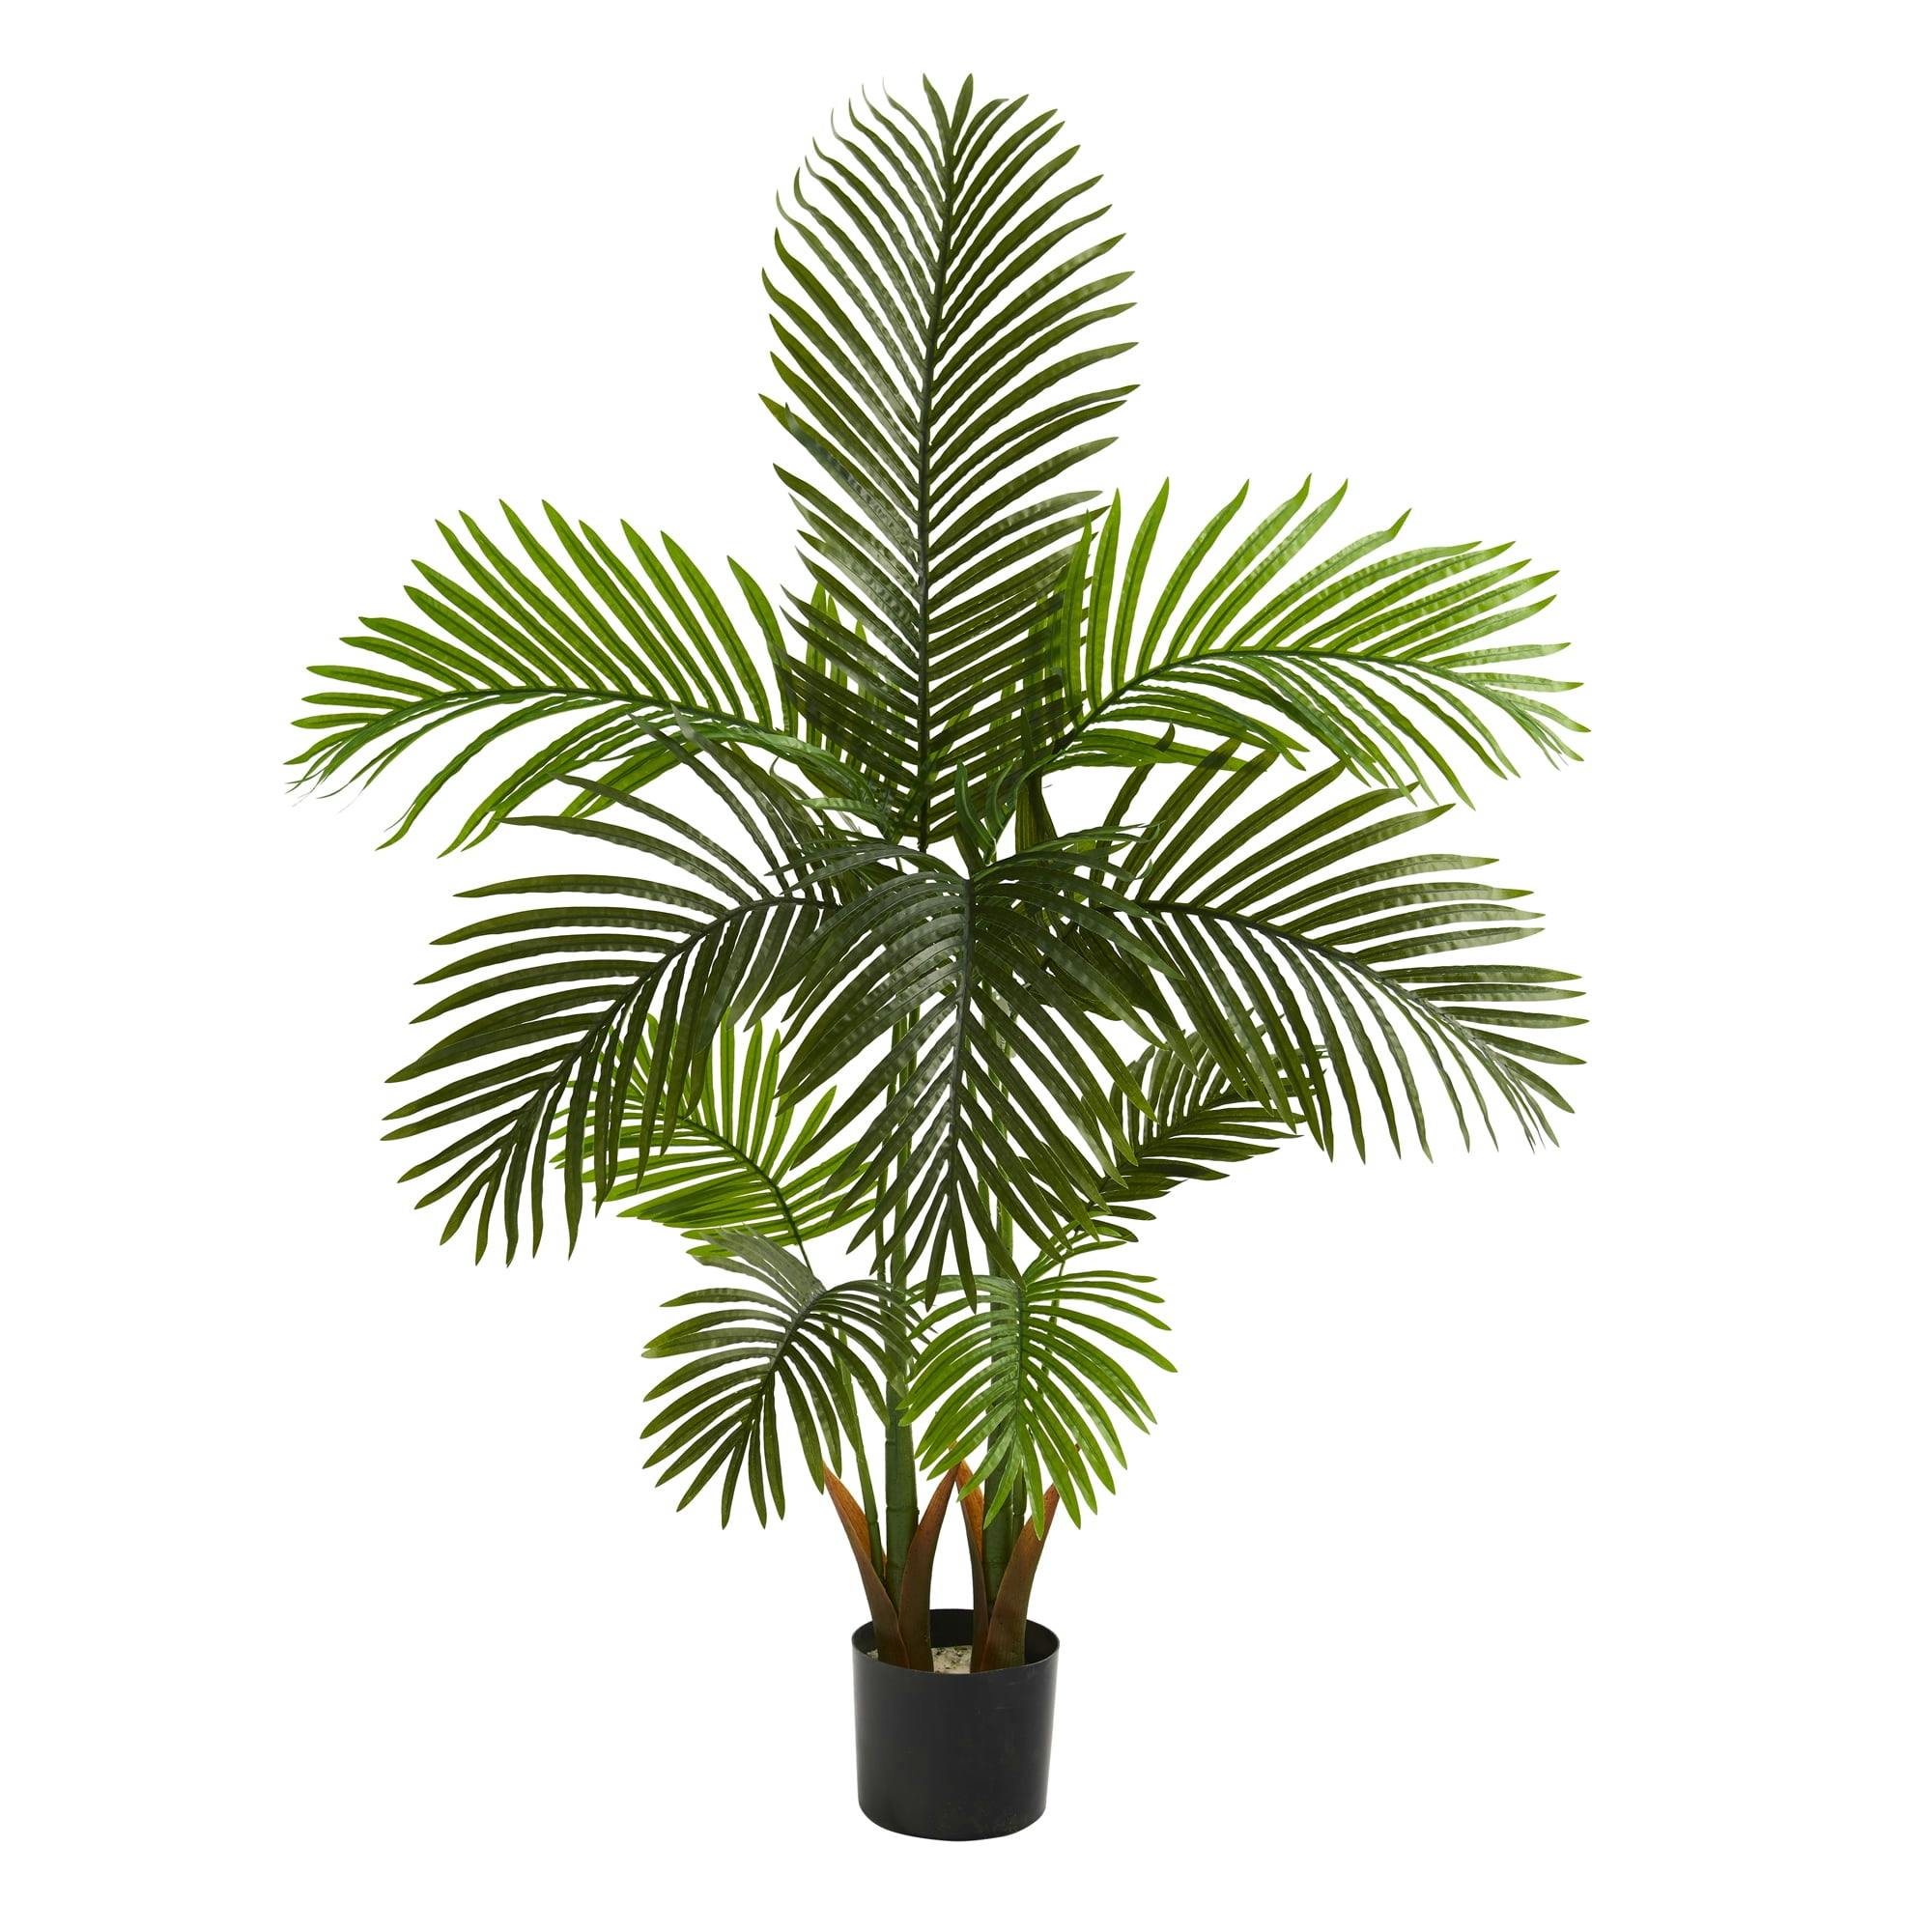 Lush Green 62" Artificial Areca Palm Tree in Nursery Planter